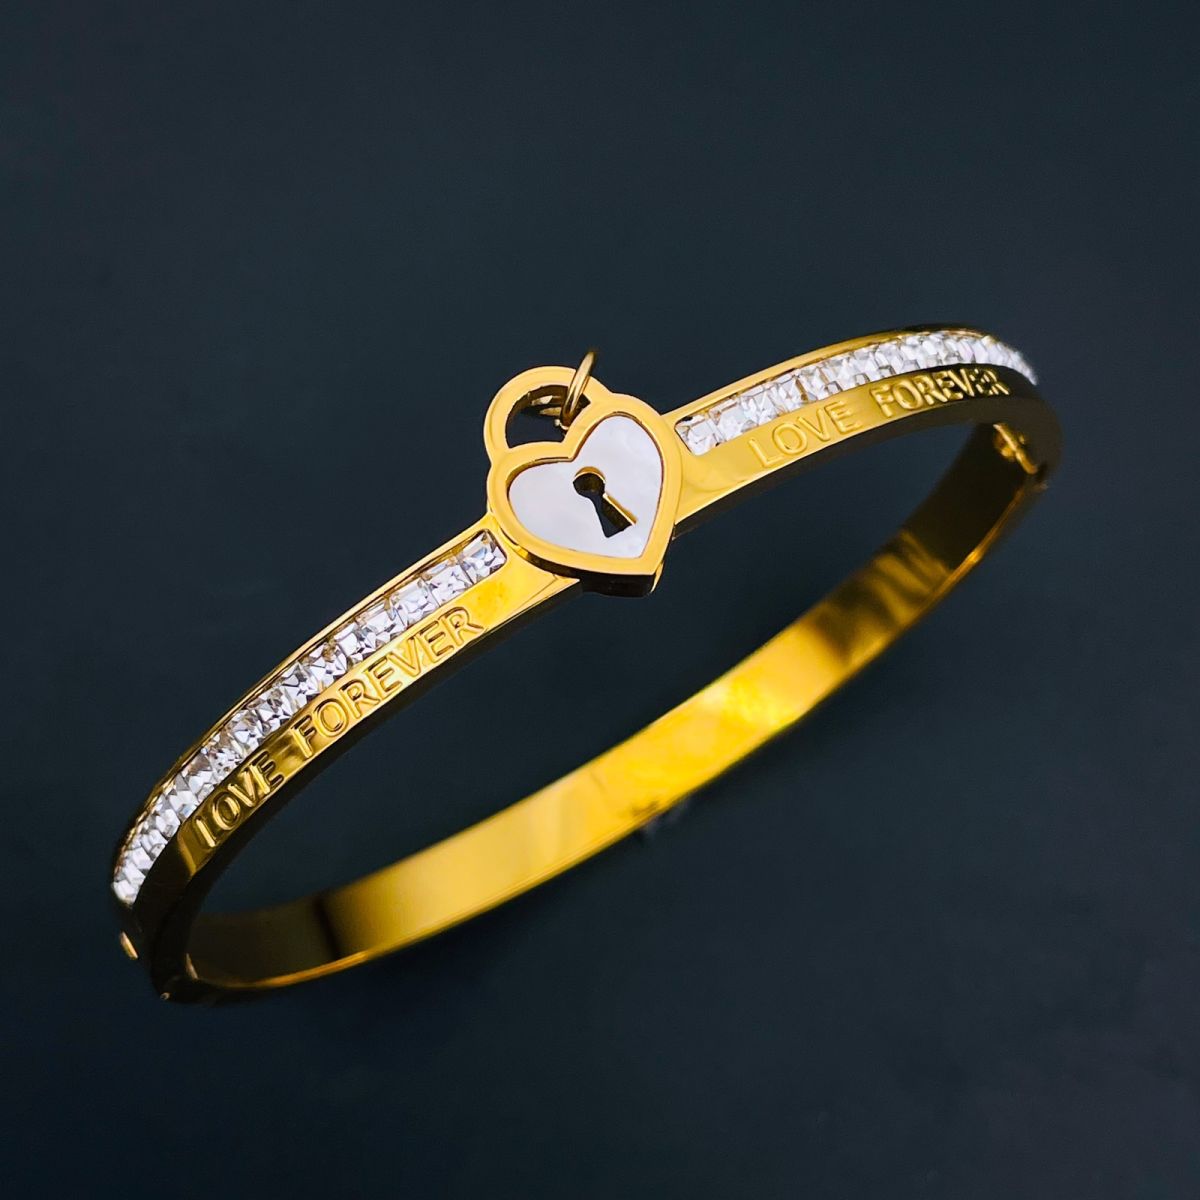 Bracelet Clasp for sale | eBay